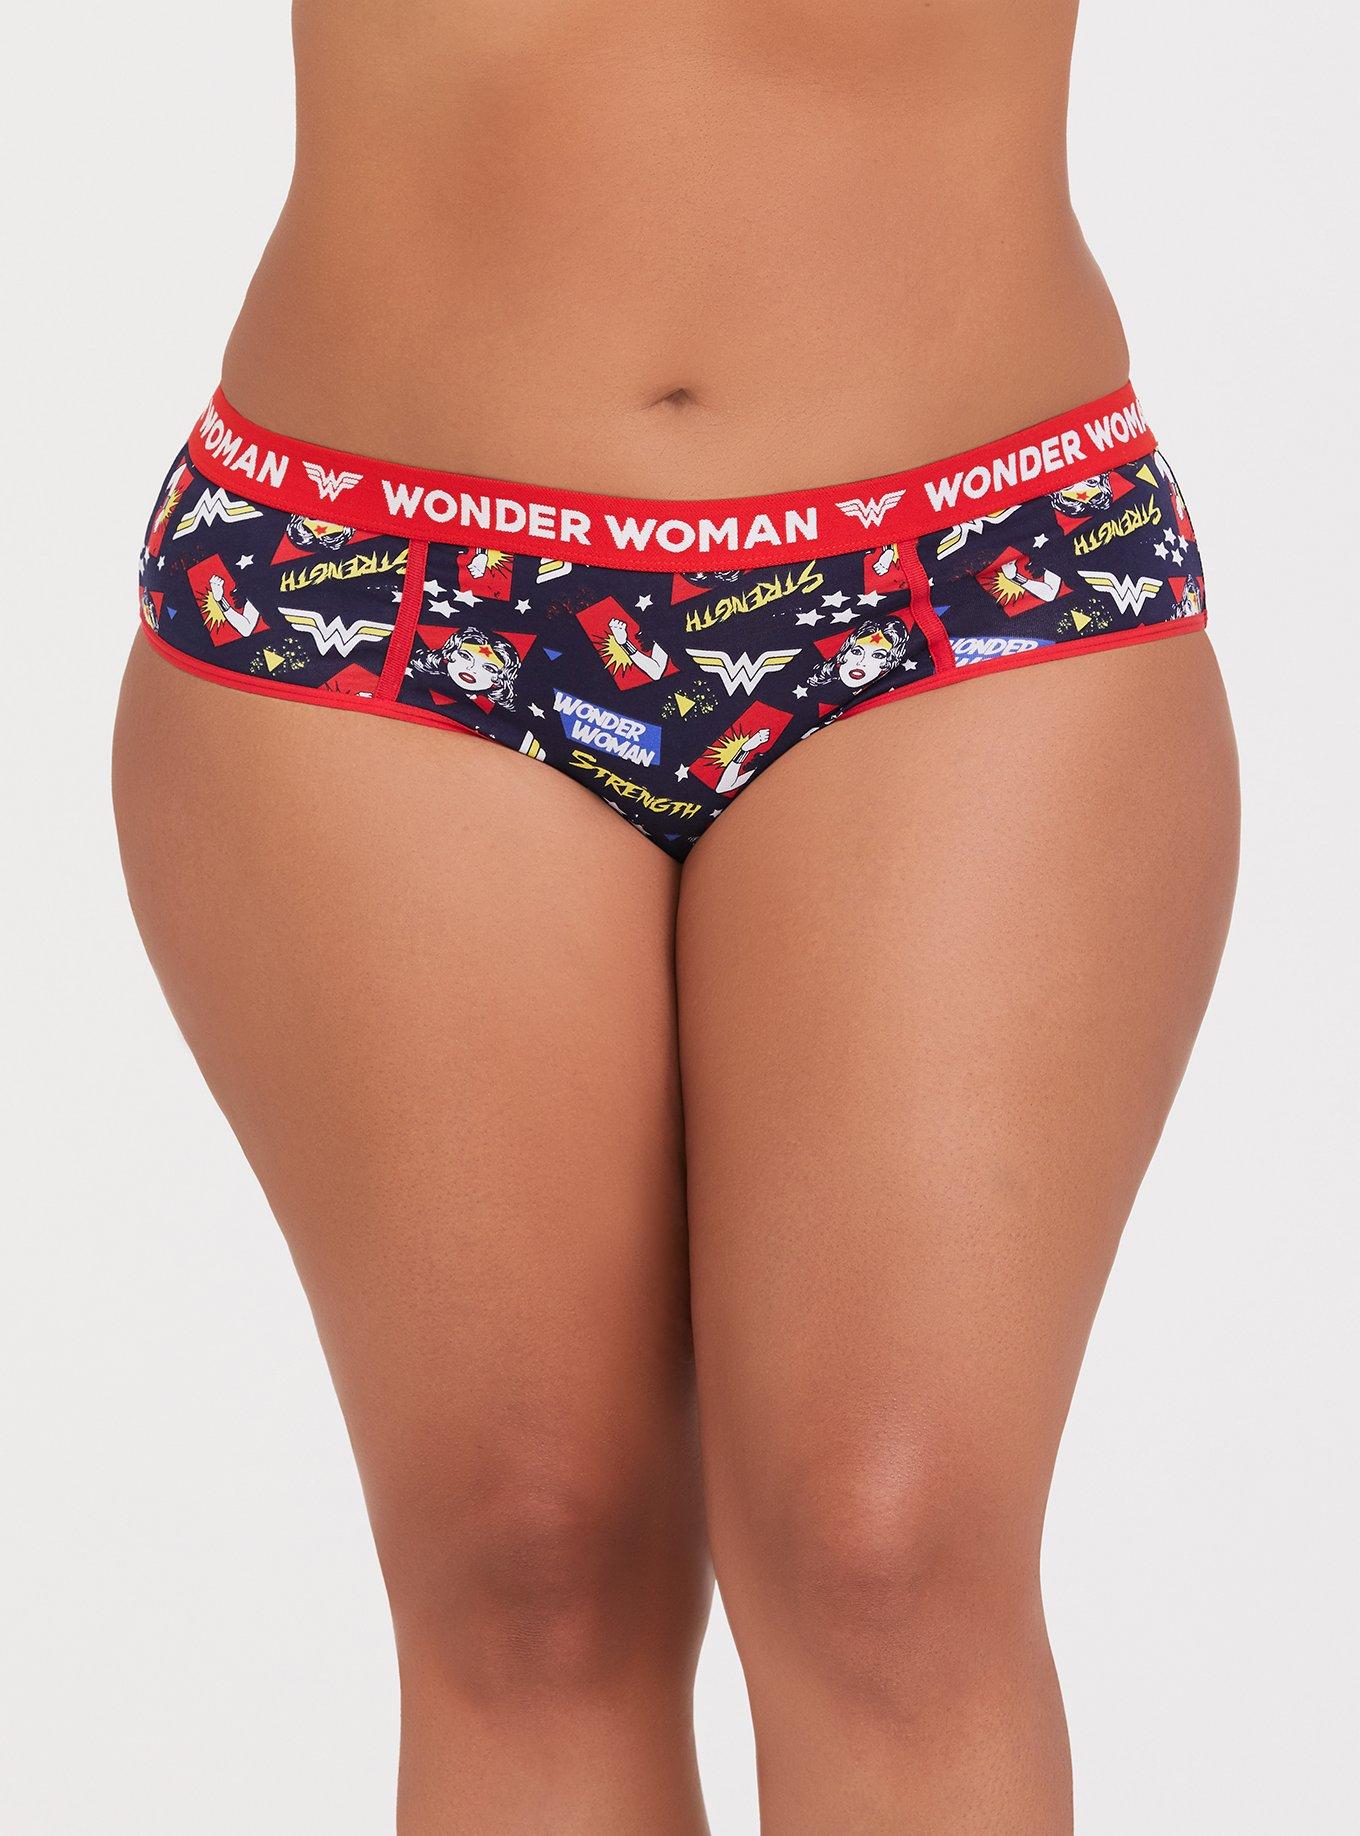 Juniors Wonder Woman Cotton Spandex Panty